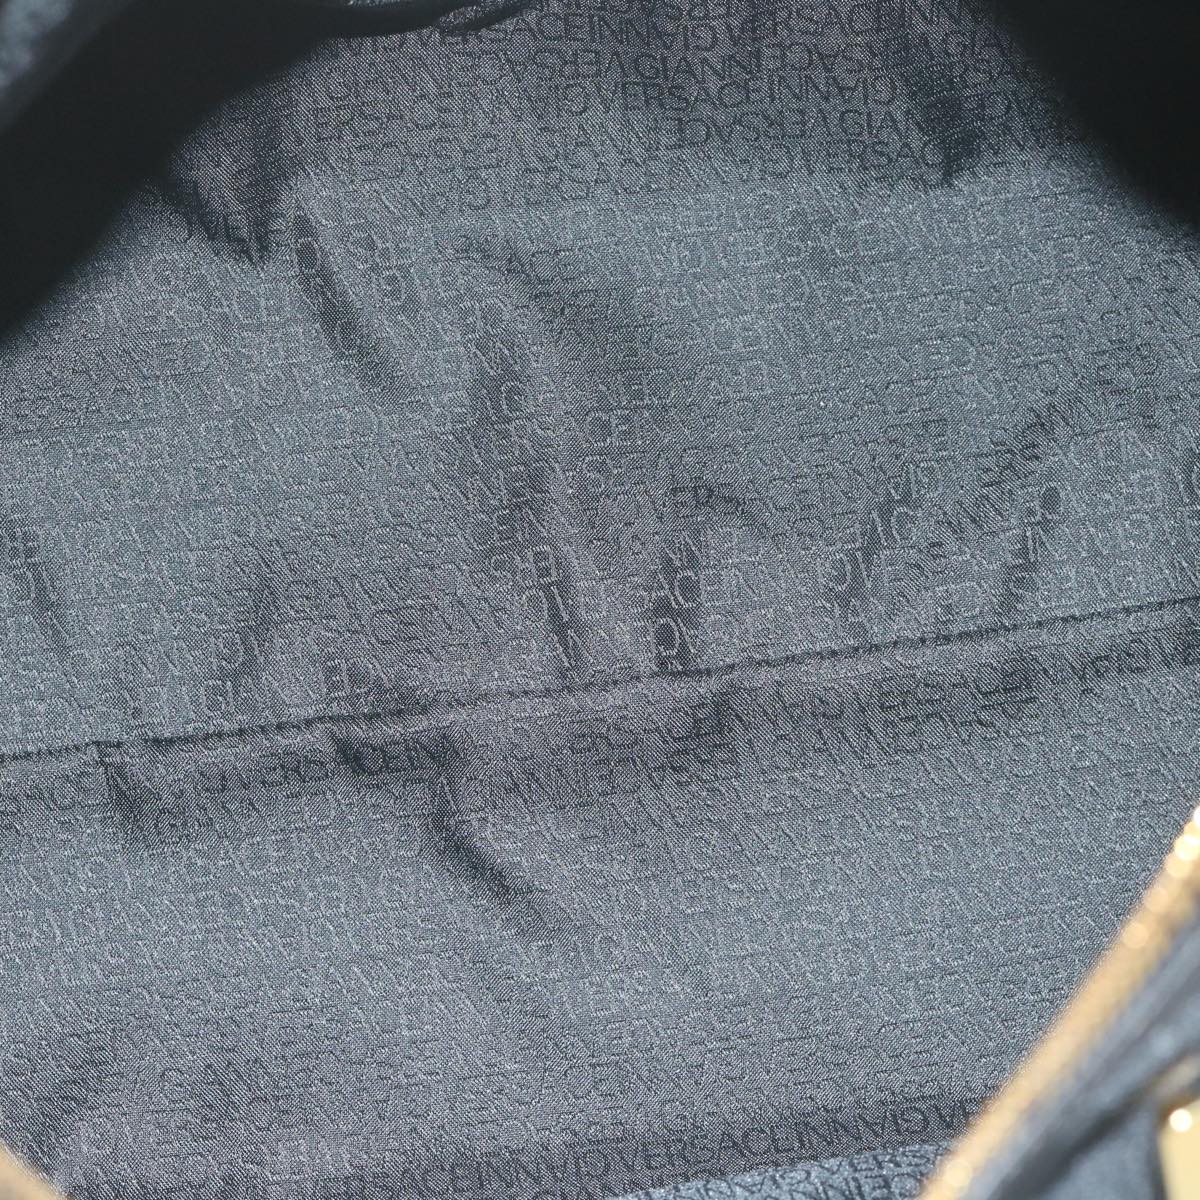 Gianni Versace Boston Bag Canvas Black Auth Yk10120